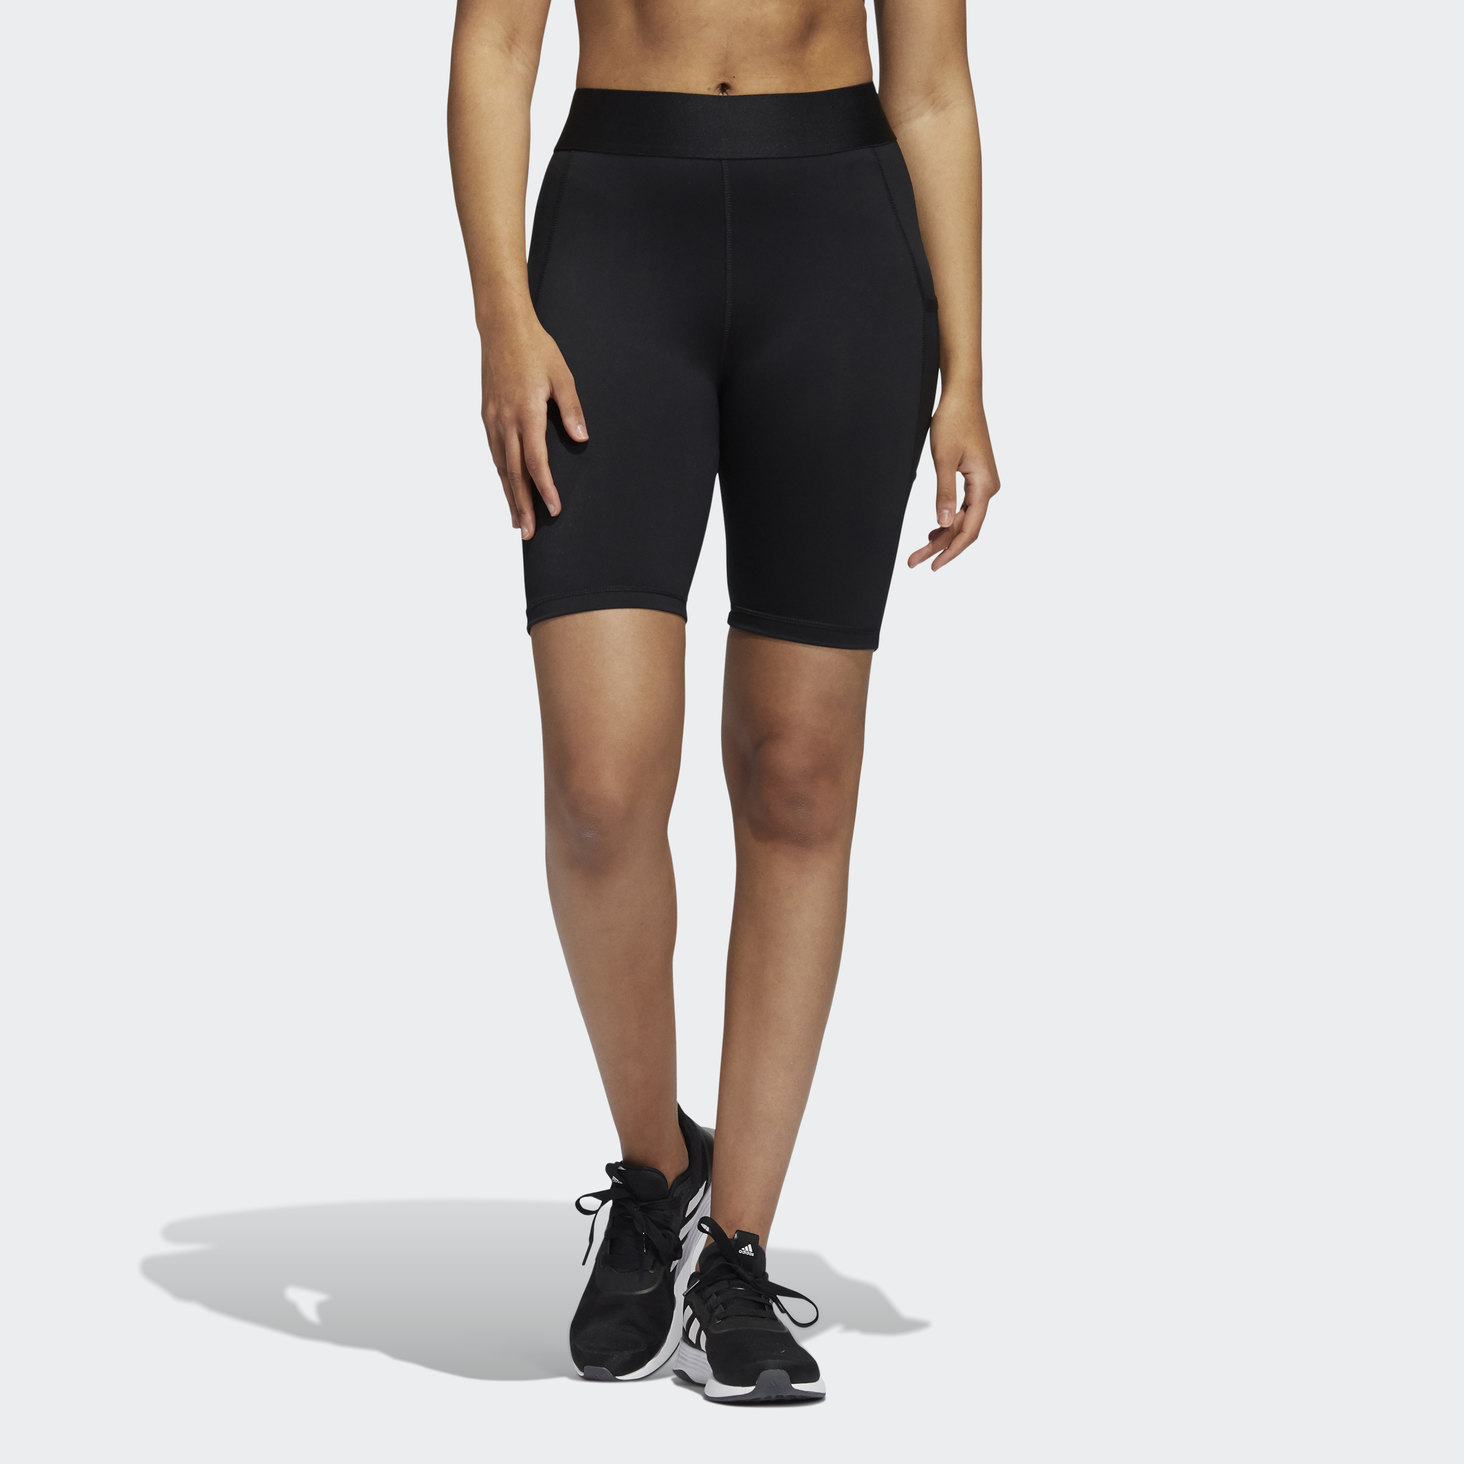 adidas - Techfit Thermo Shorts Tight - Black Compression Shorts